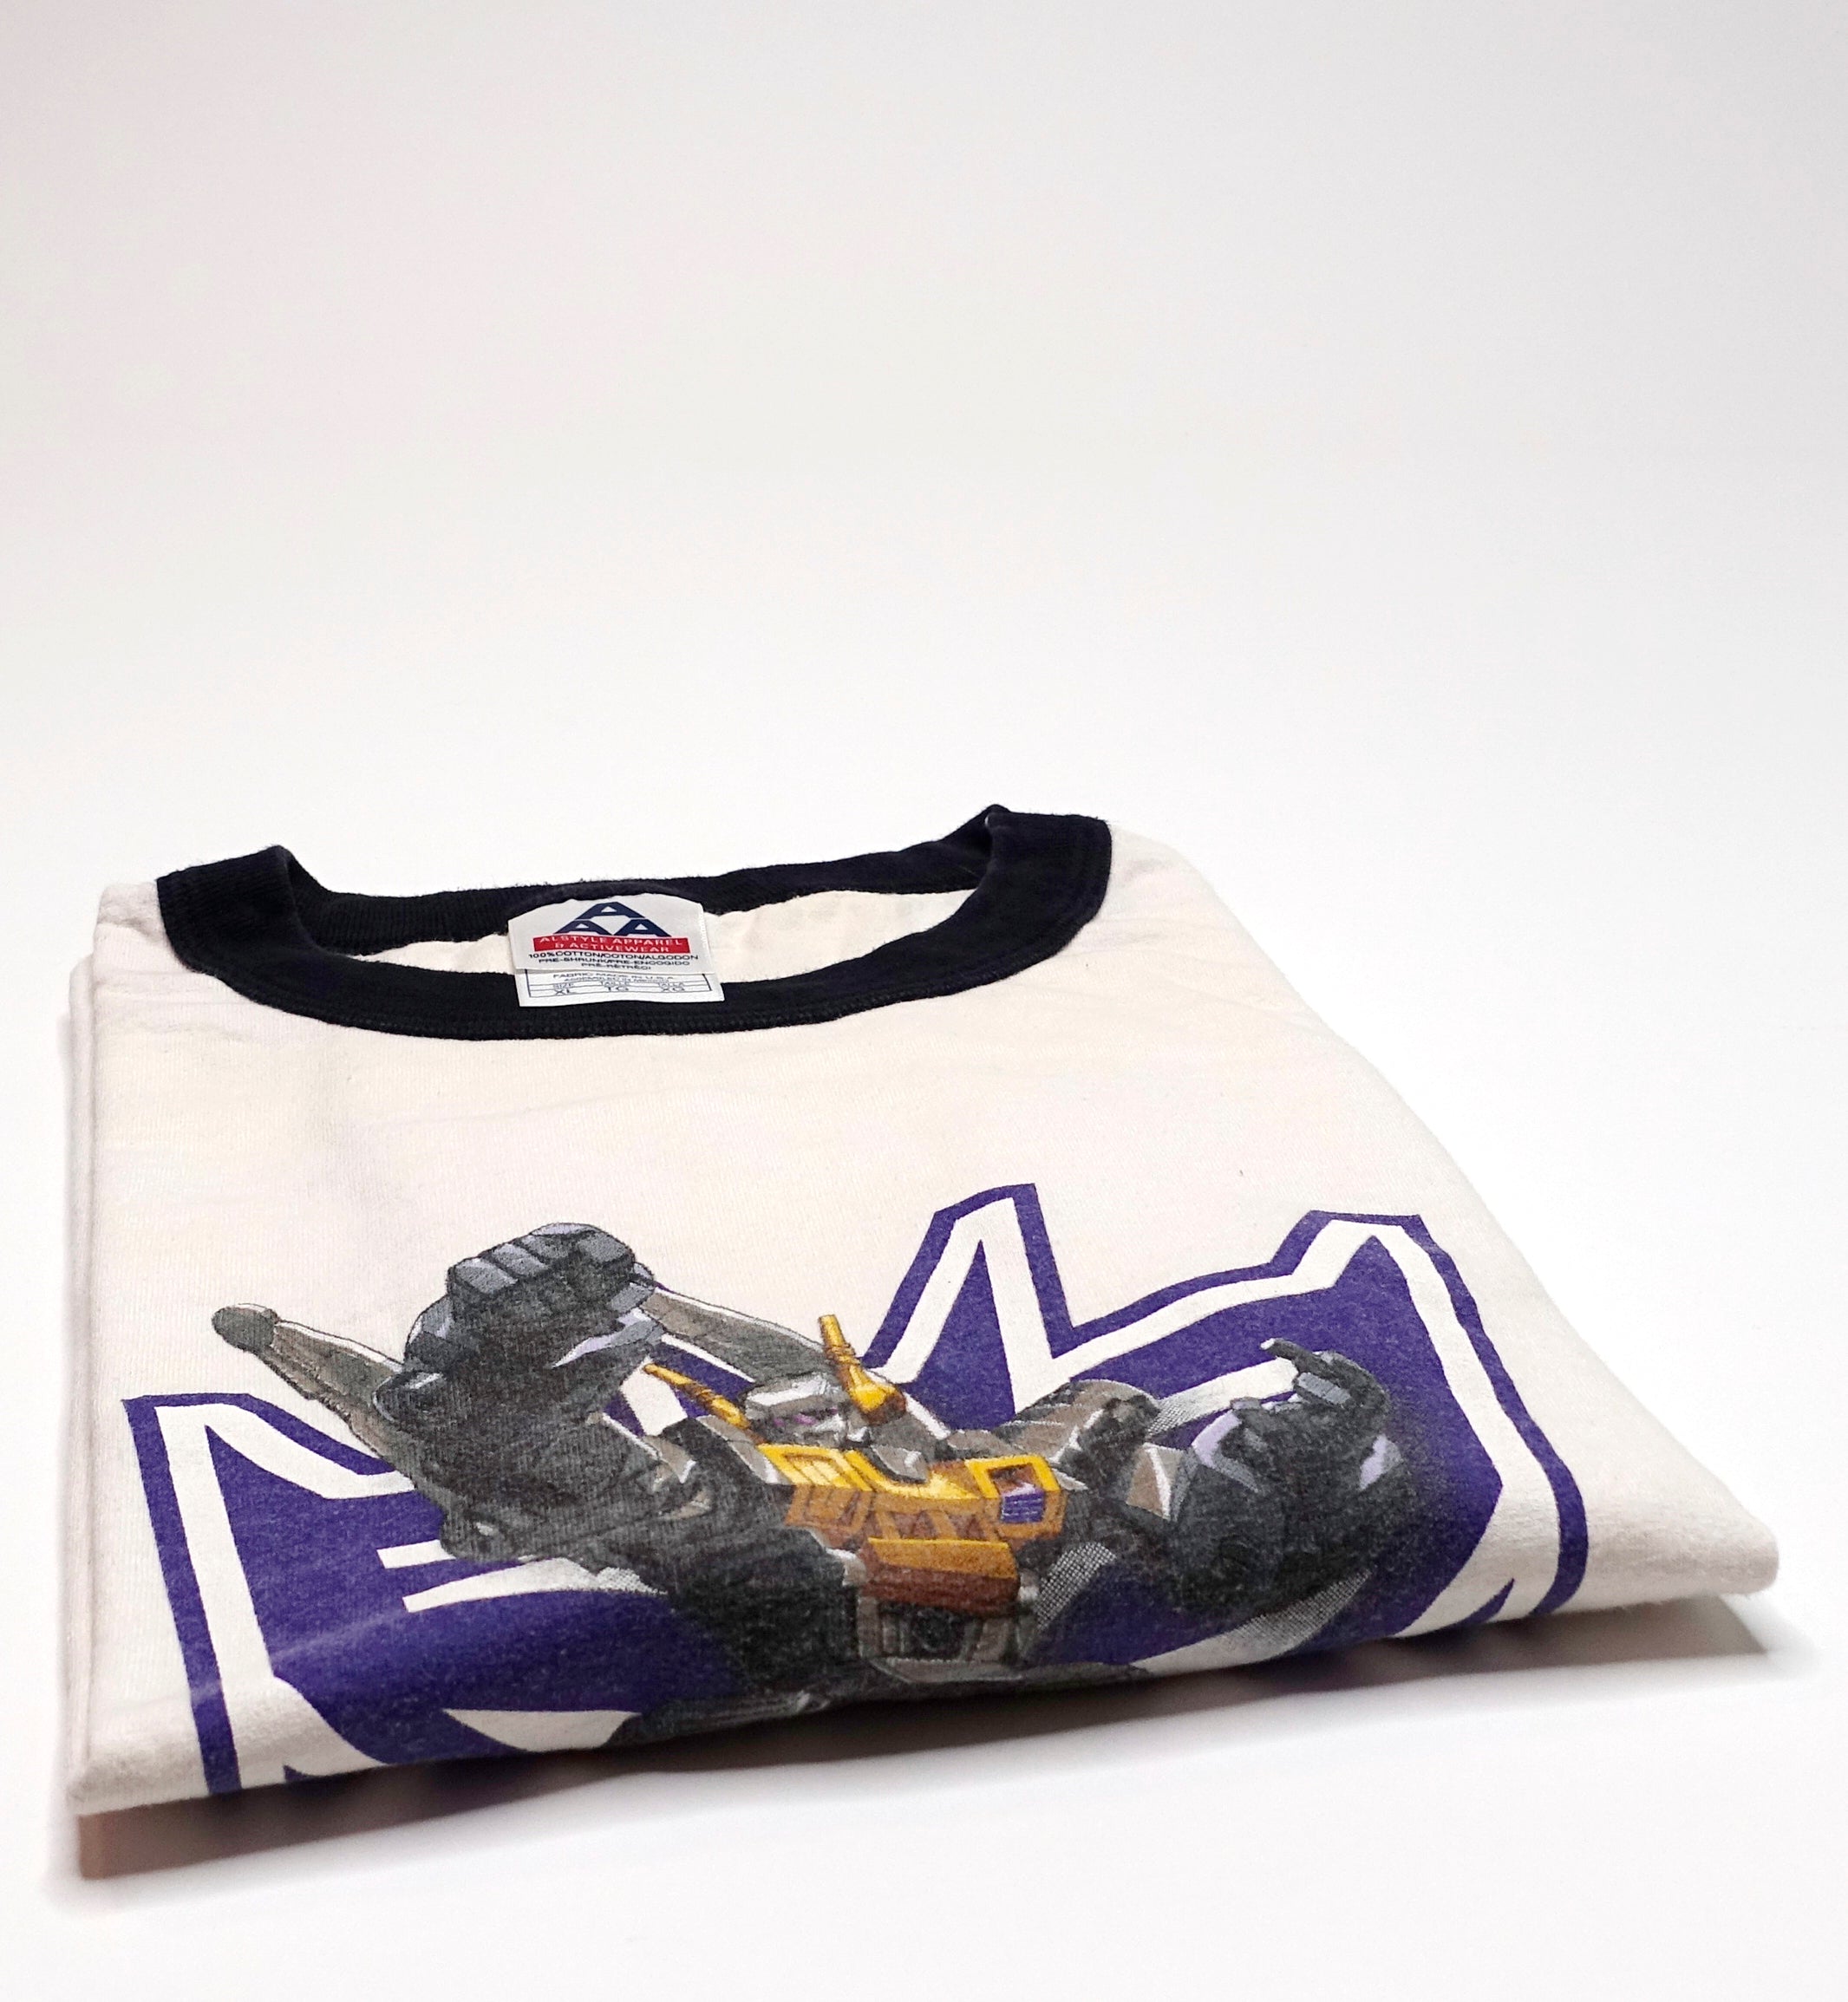 Transformers - Decepticon 2002 Hasbro Ringer Graphic Shirt Size XL